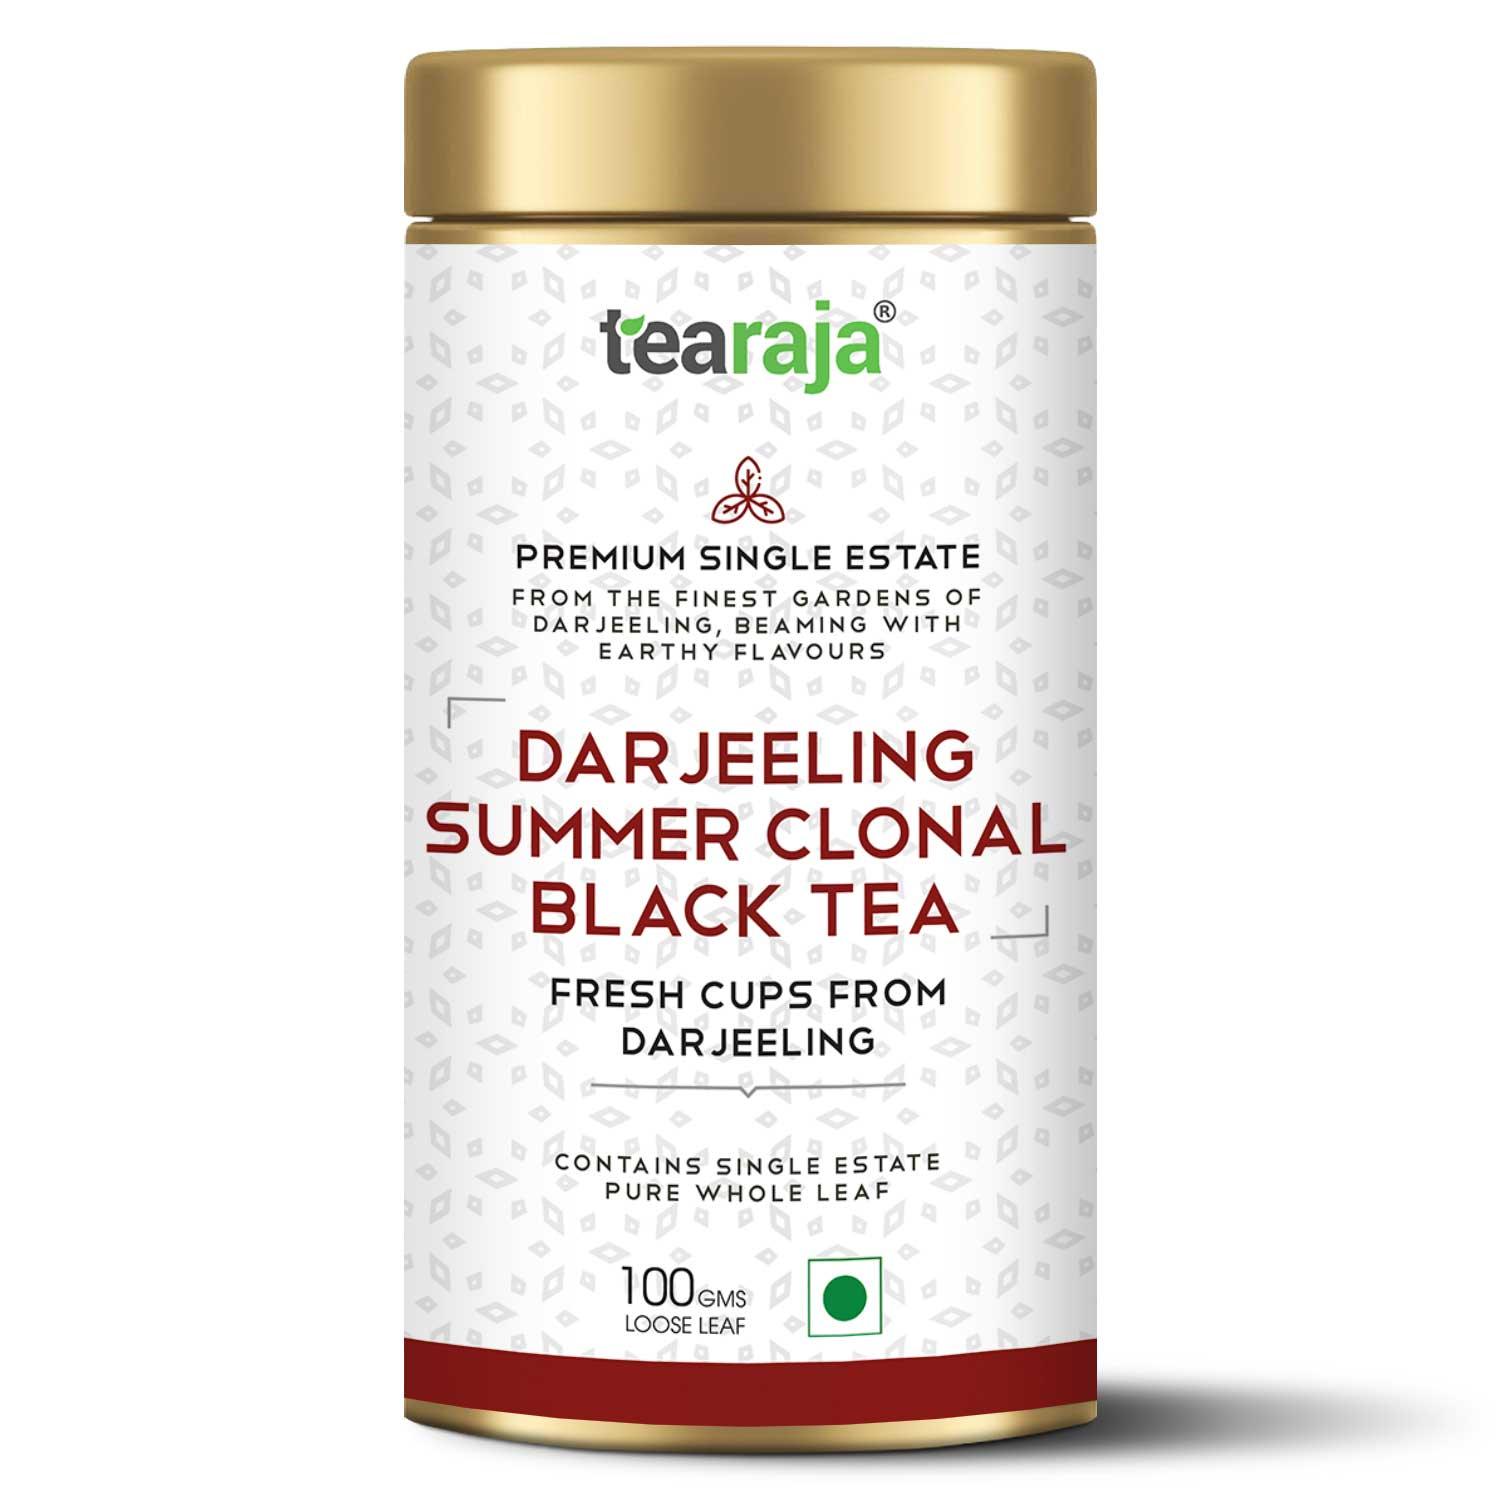 Darjeeling Summer Clonal Black Tea - Tearaja